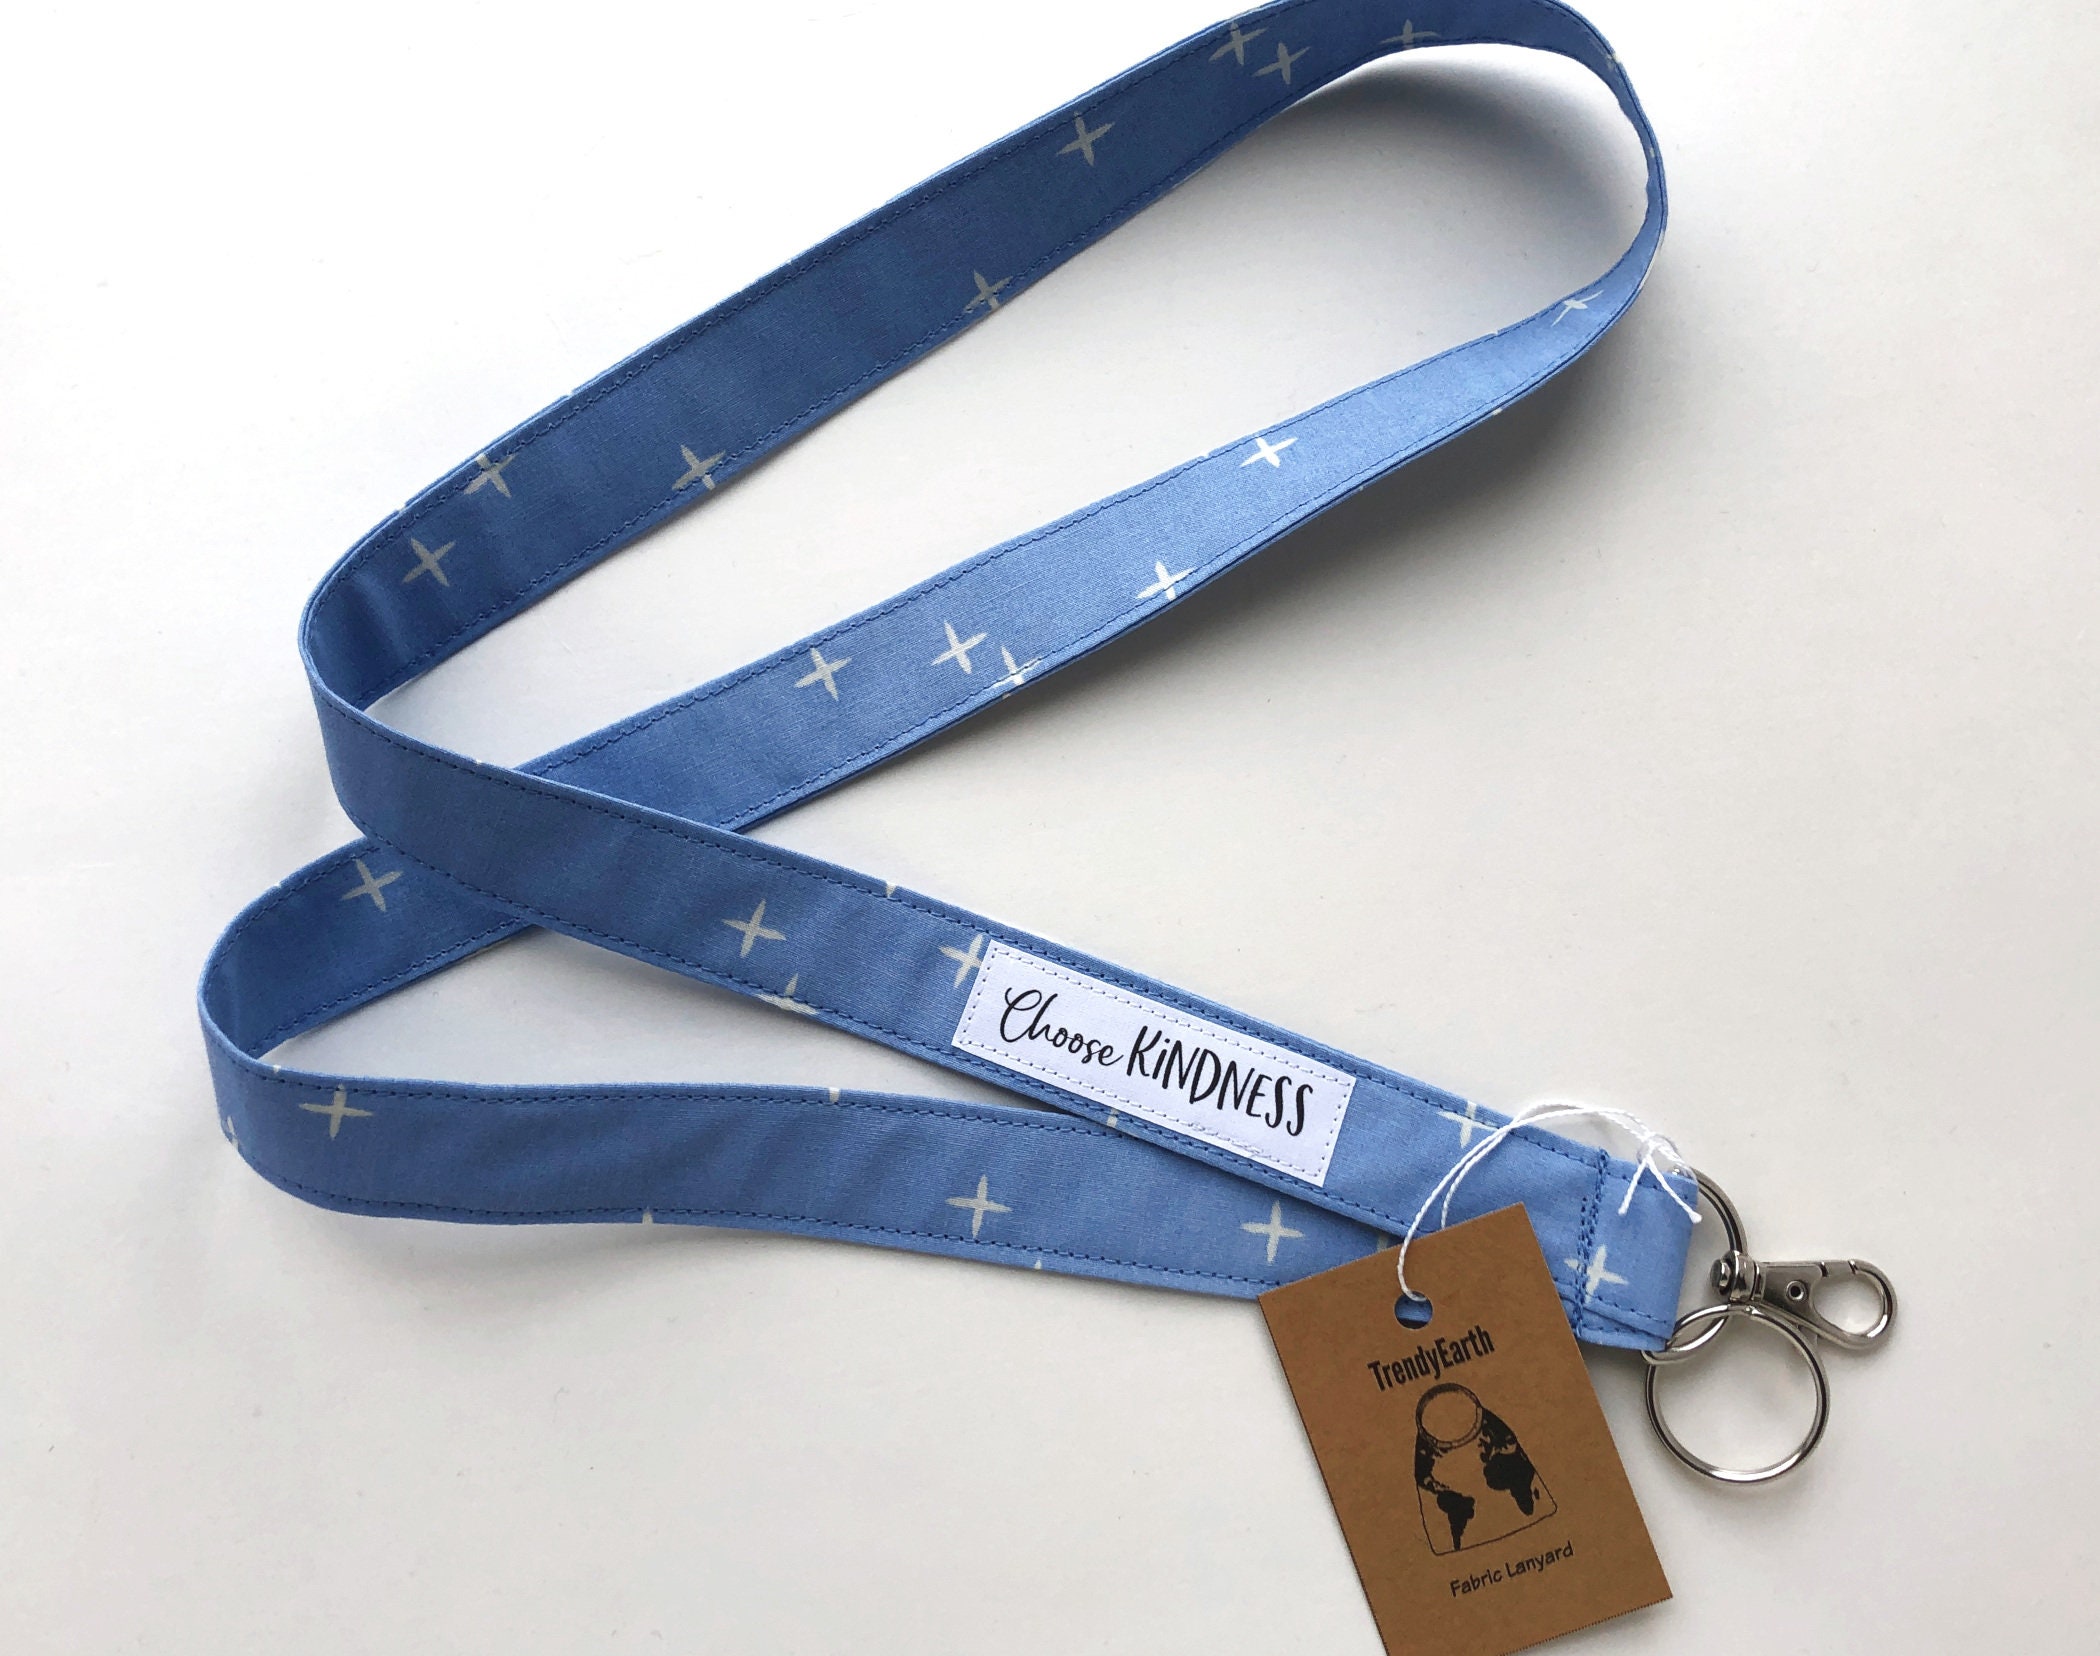 Long Lanyard ID Name Badge Holder made of Organic Cotton Fabric USB Keychain Choose Kindness 